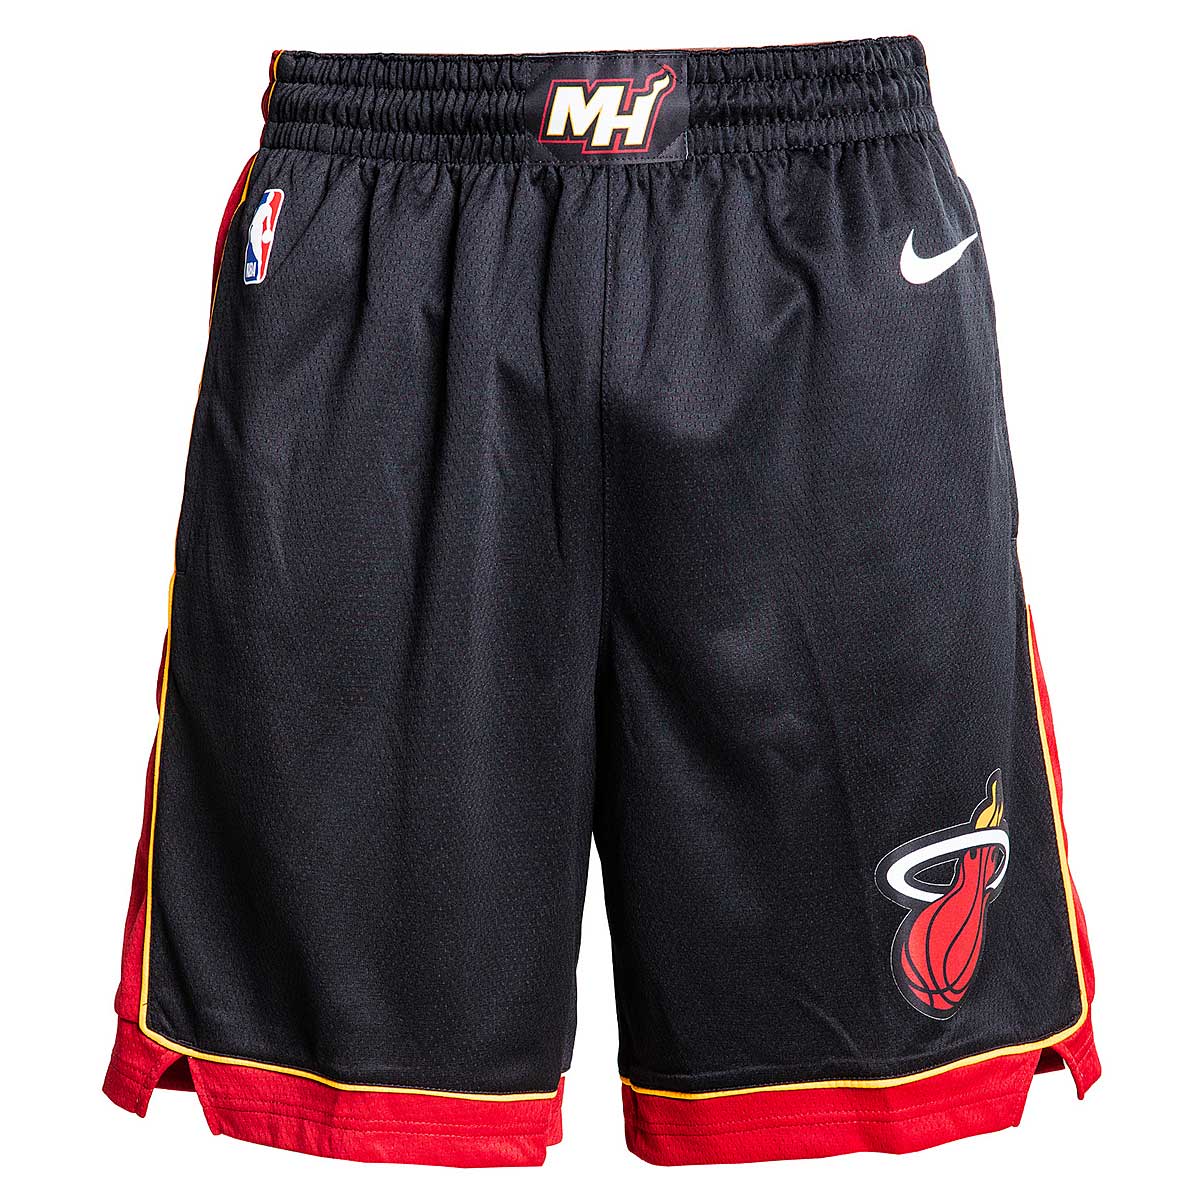 Image of Nike NBA Miami Heat Dri-fit Icon Swingman Shorts, Schwarz/tough Rot/weiss